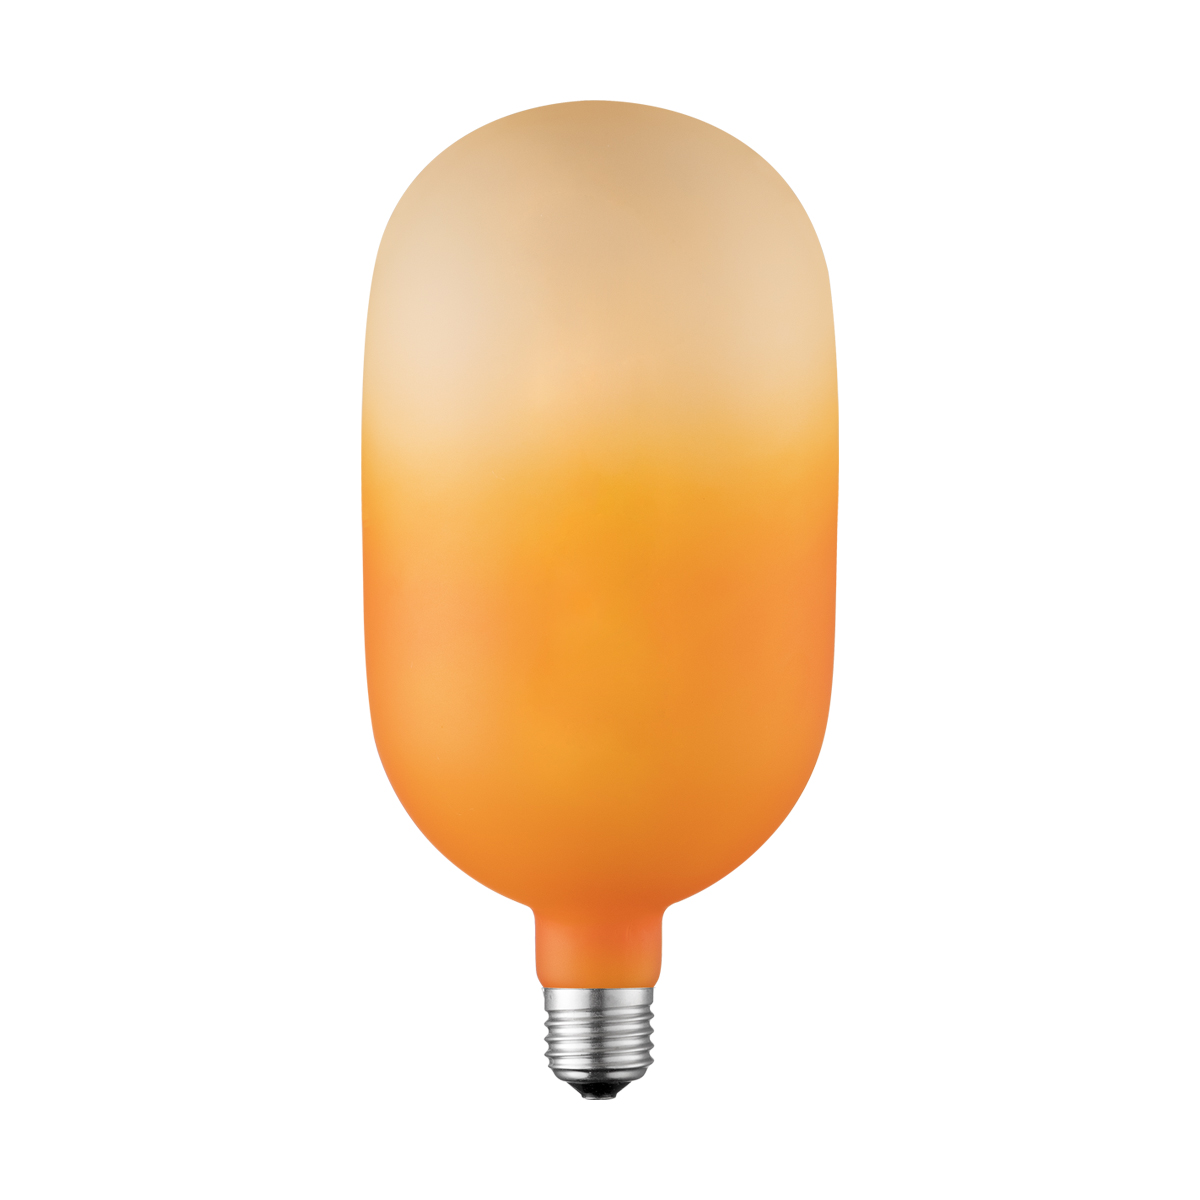 Tangla lighting - TLB-9001-04N - LED Light Bulb Single Spiral filament - 4W gradient opal - medium - fade - non dimmable - E27